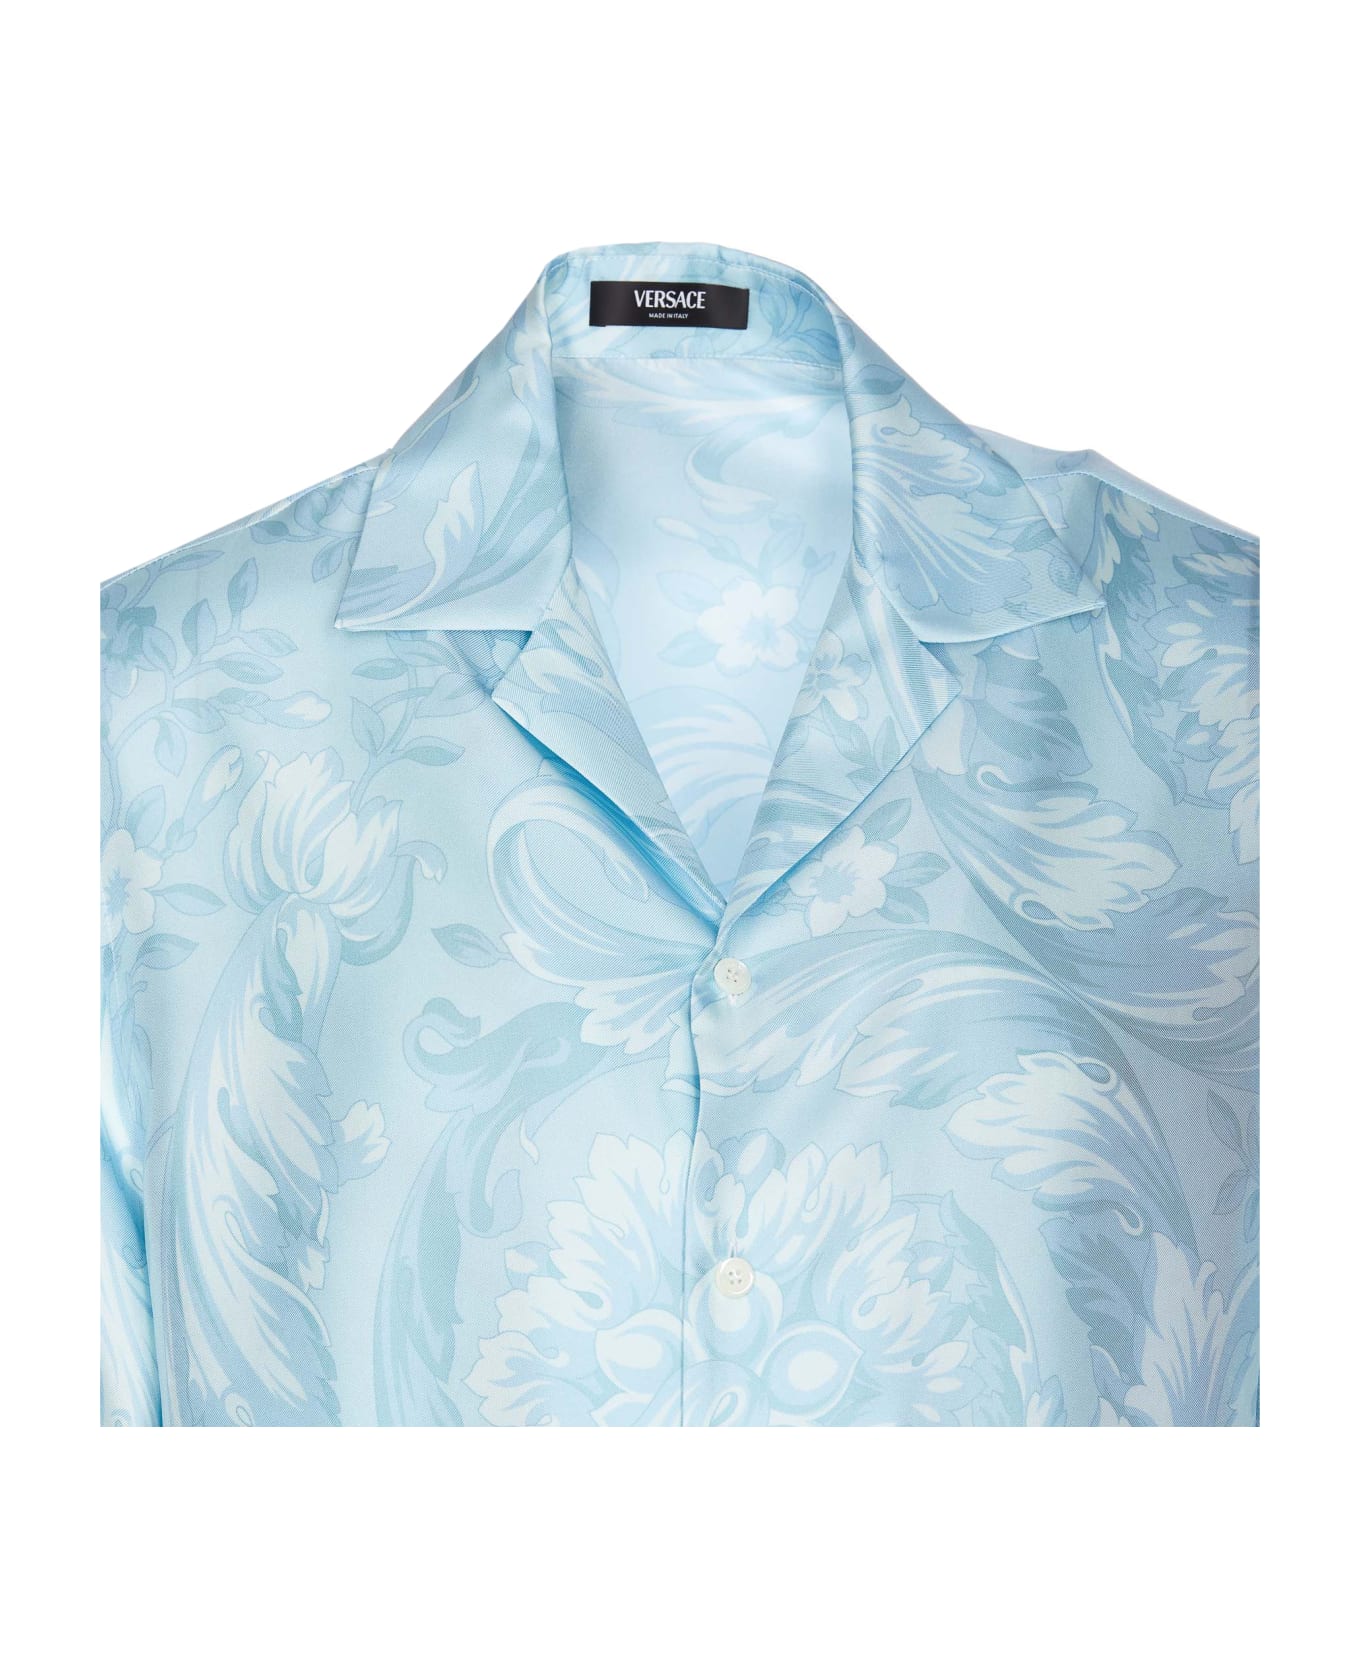 Versace Barocco Shirt - Blue